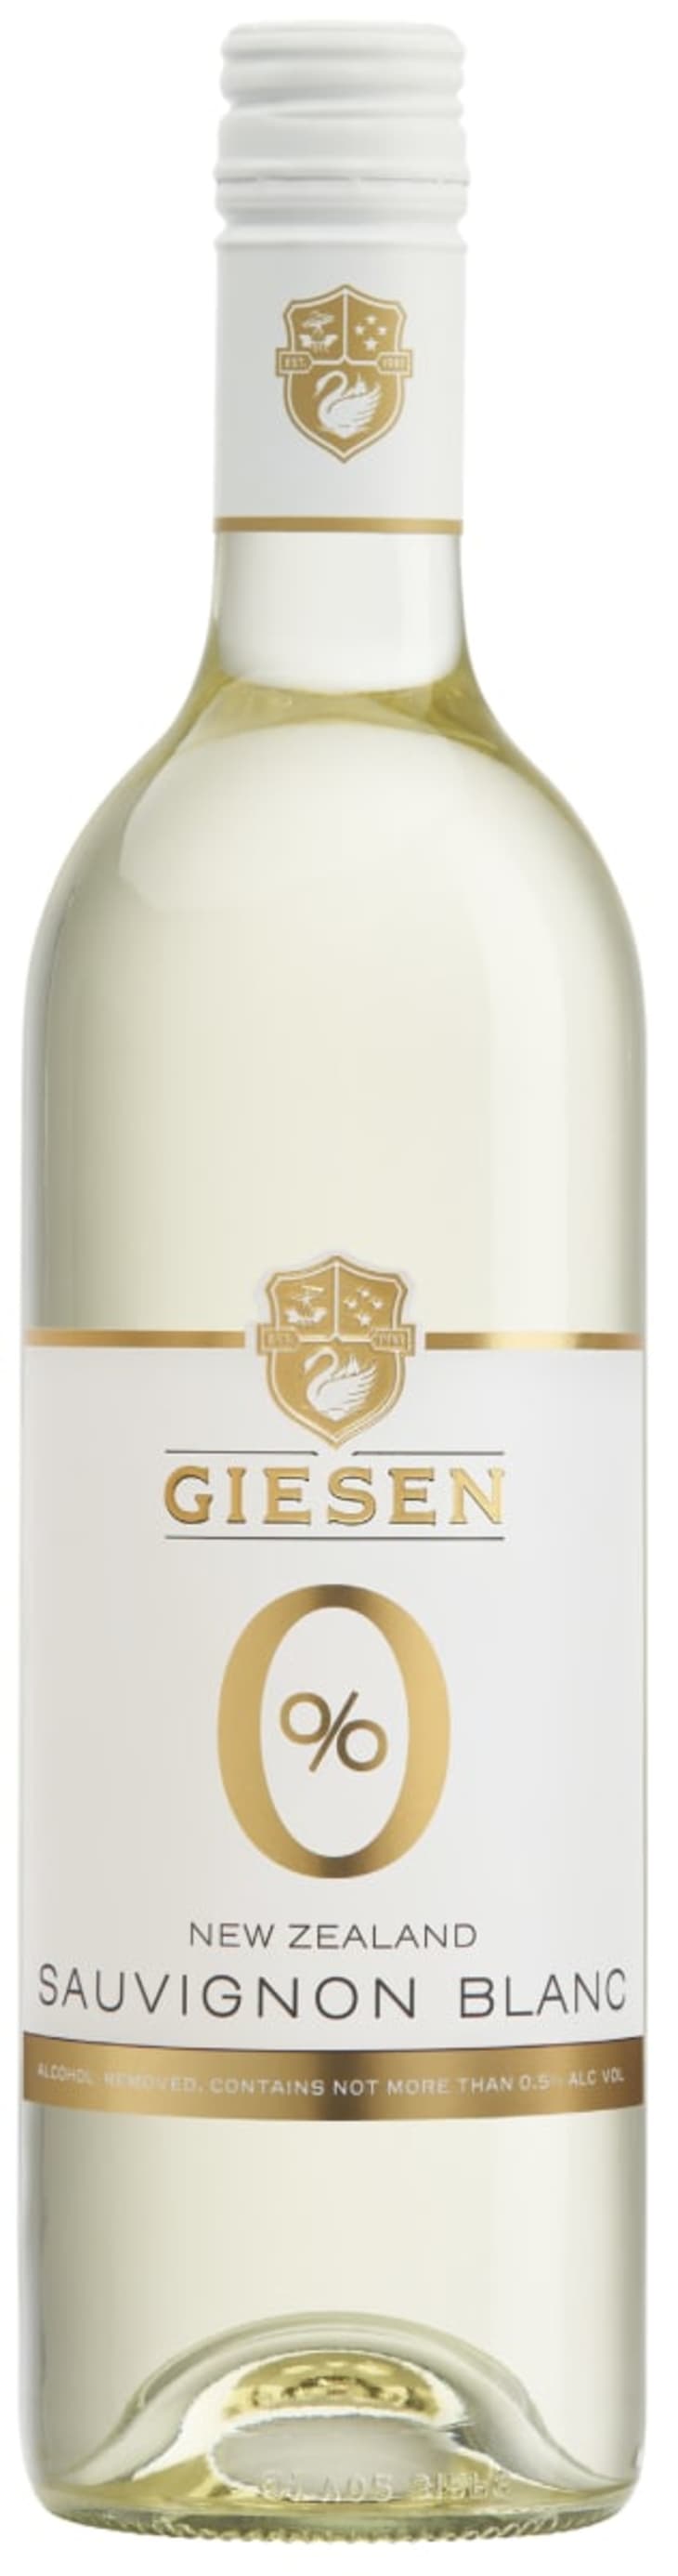 Giesen 0% Sauvignon Blanc at Wine.com